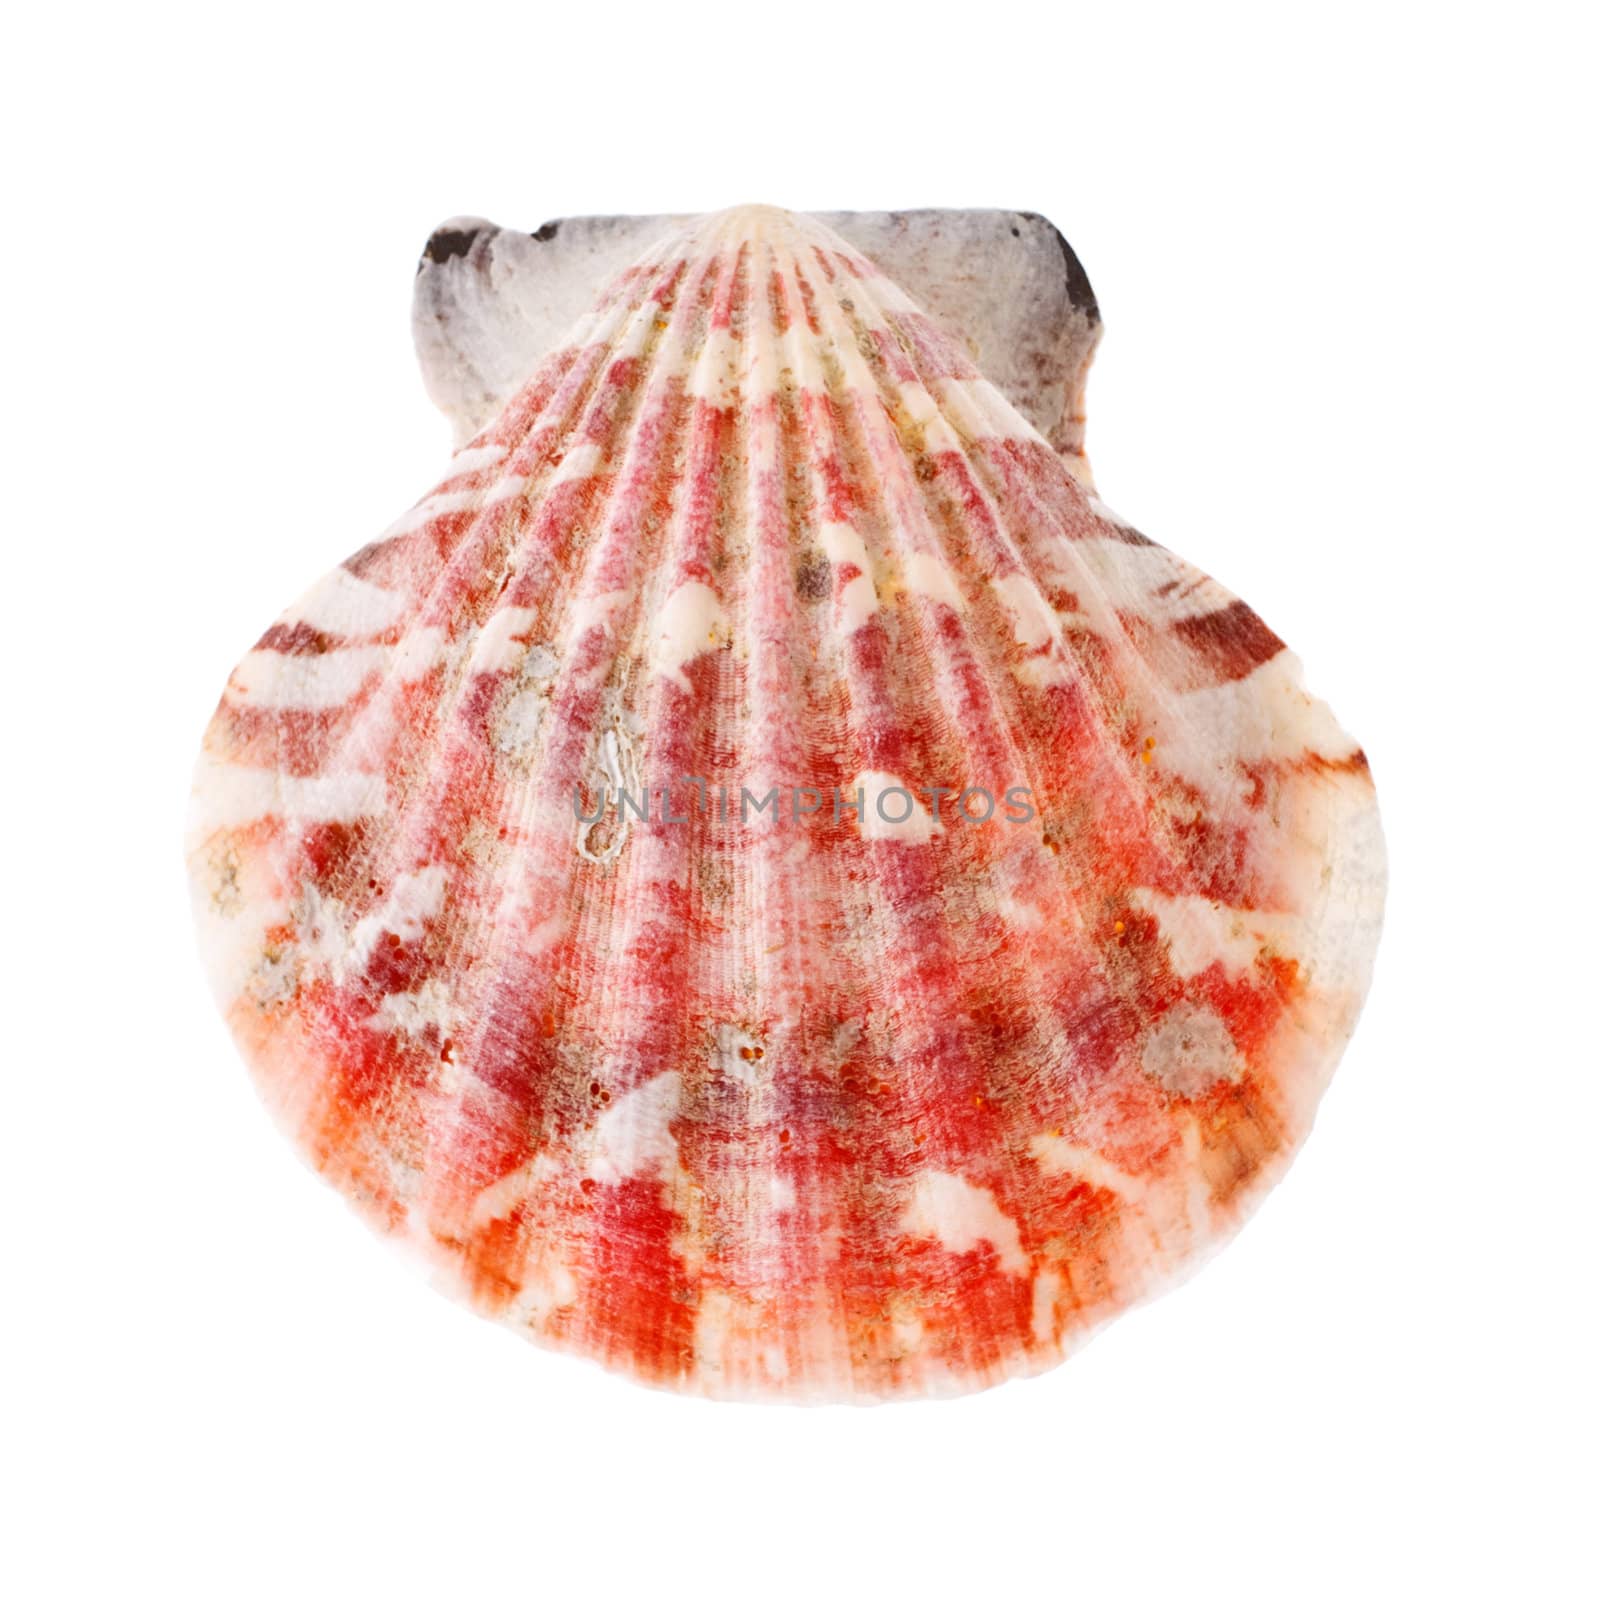 beauty radial seashell isolated on white background